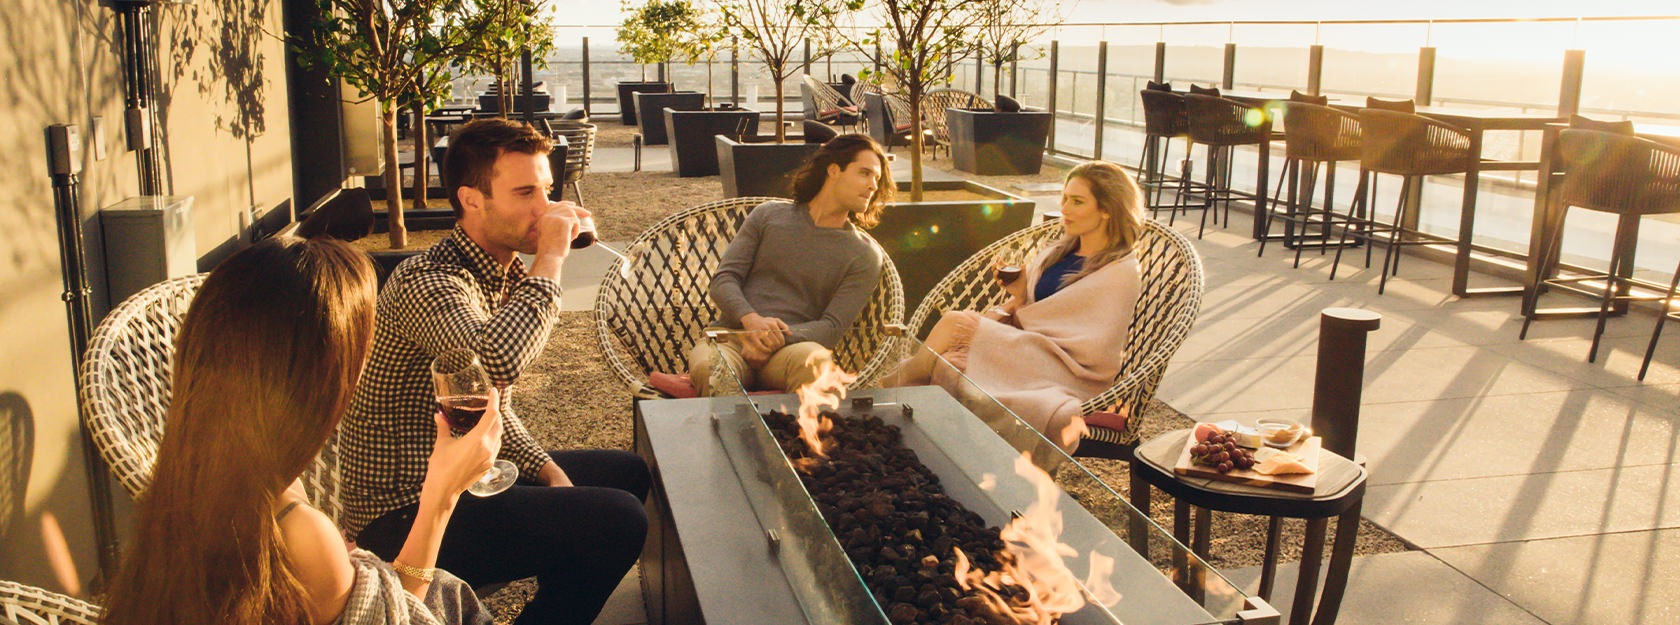 Friends sitting outside on a deck drinking wine